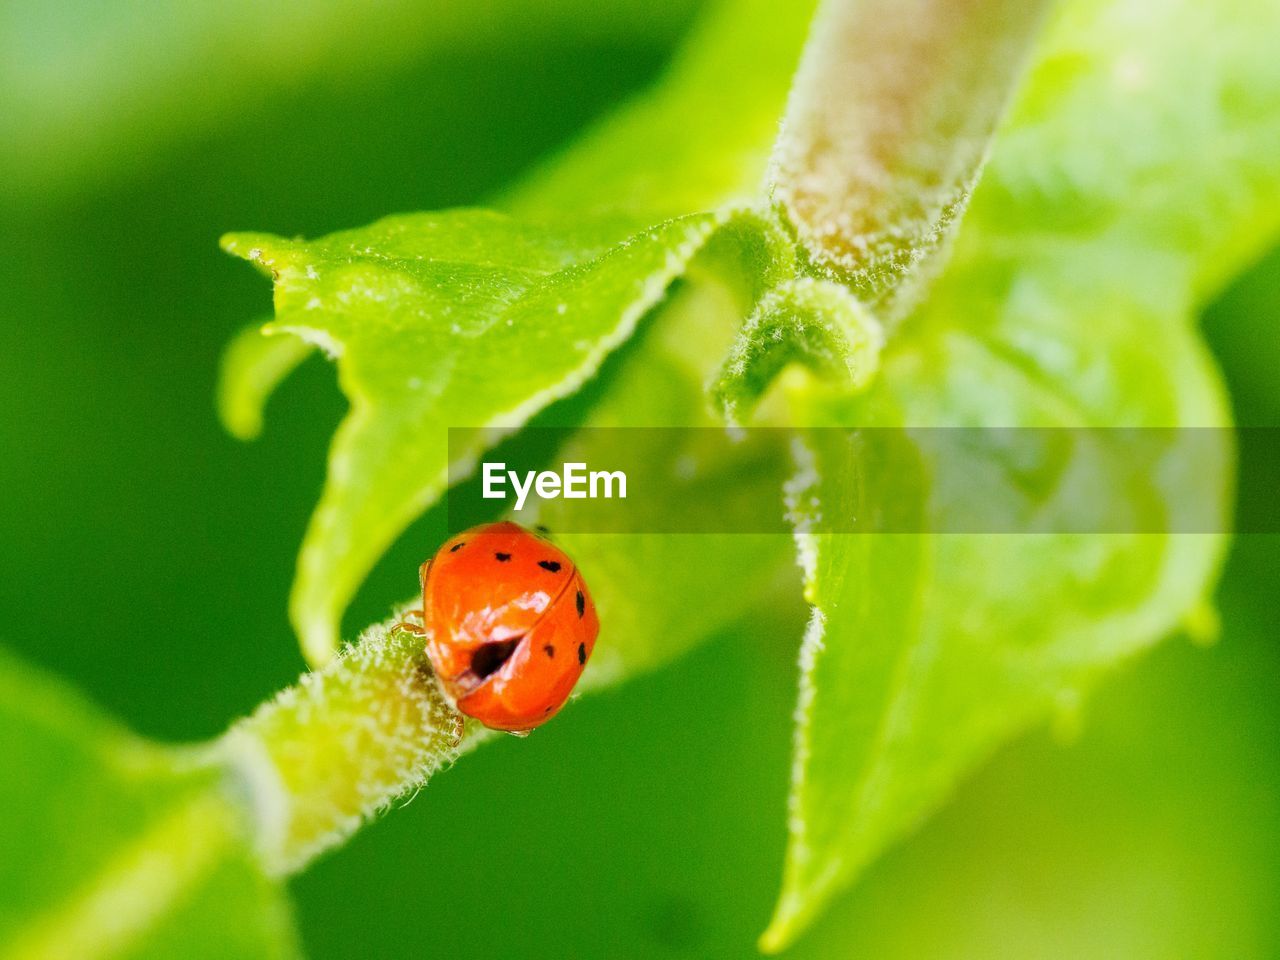 Ladybug on plant stem